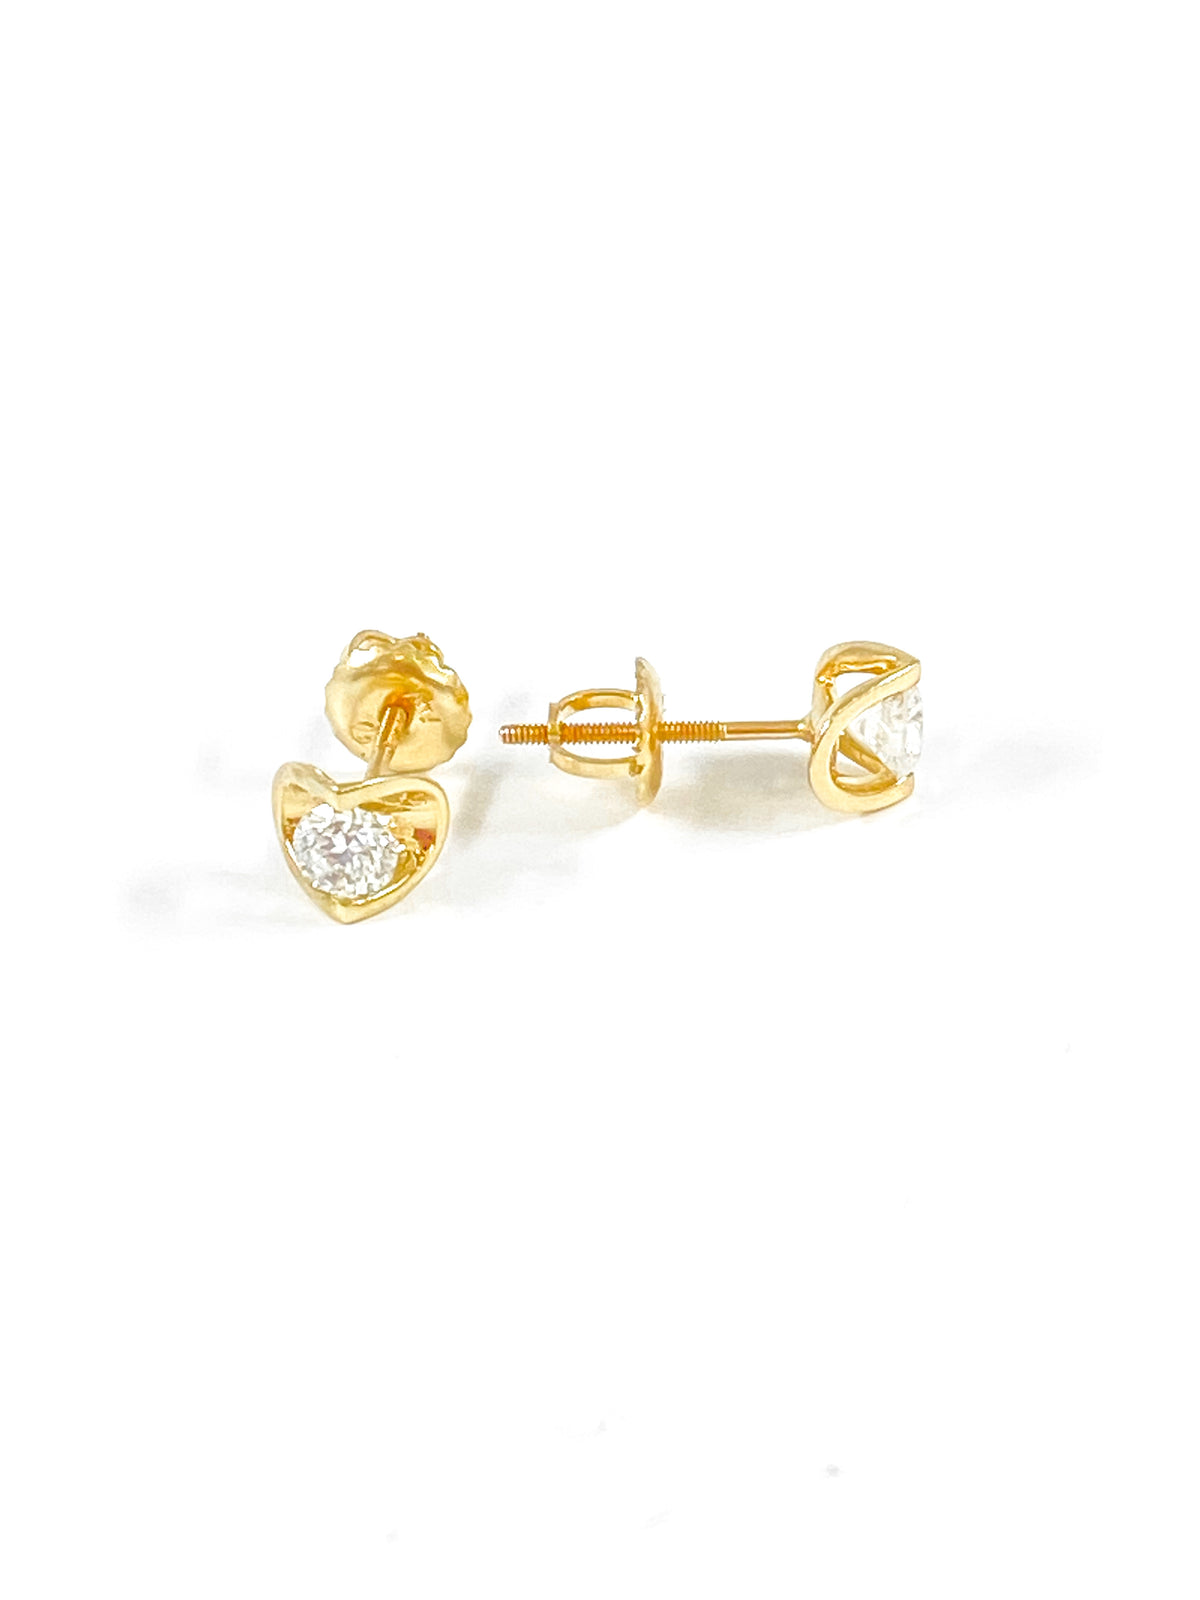 14K Yellow Gold 0.40cttw Round Cut Canadian Diamond Stud Earrings